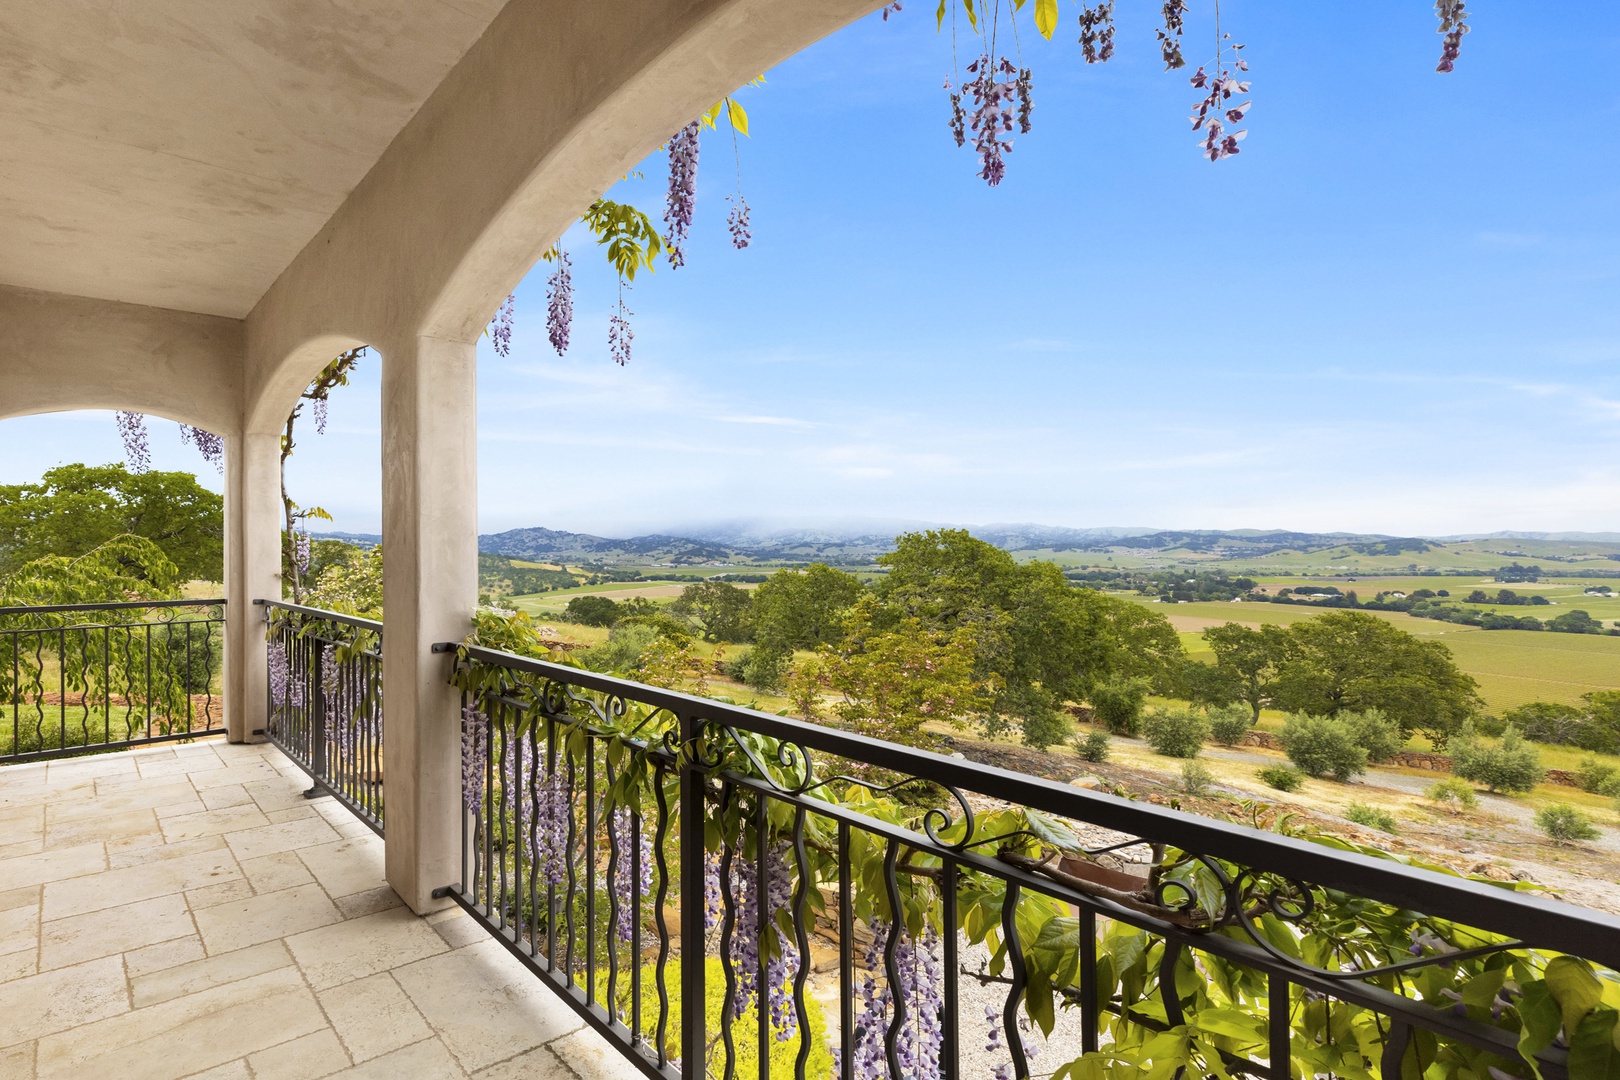 Fairfield Vacation Rentals, Villa Capricho - Guest House views over Suisun Valley